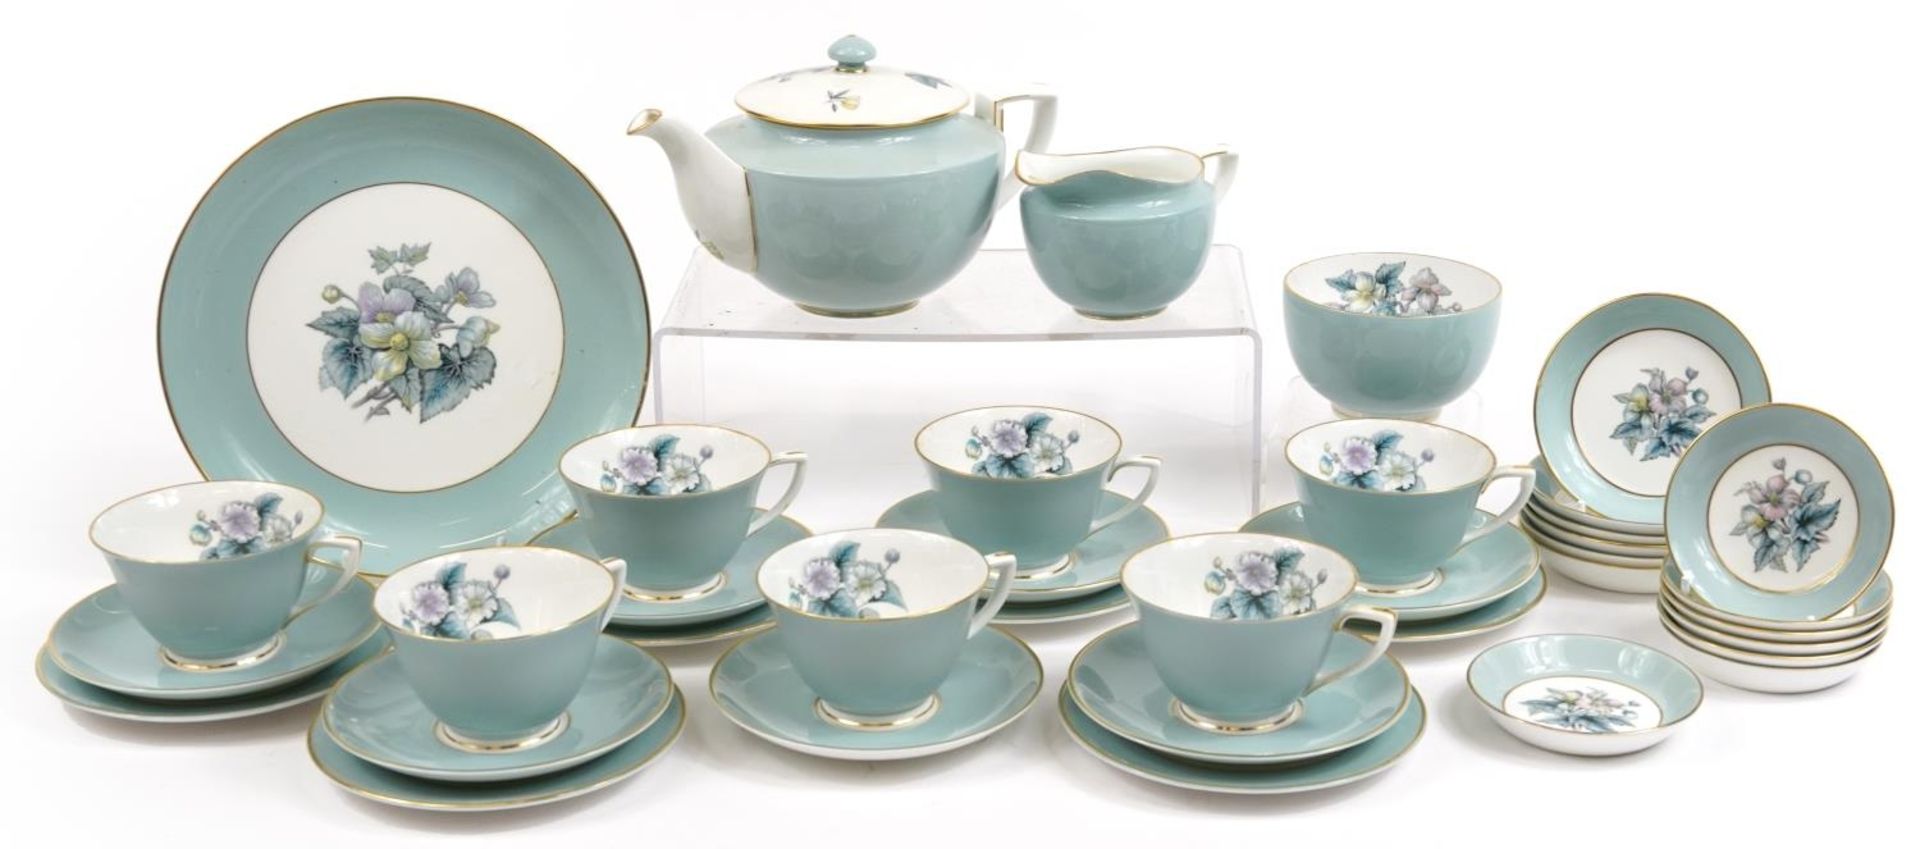 Royal Worcester Woodland pattern teaware including teapot, milk jug, sugar bowl and trios